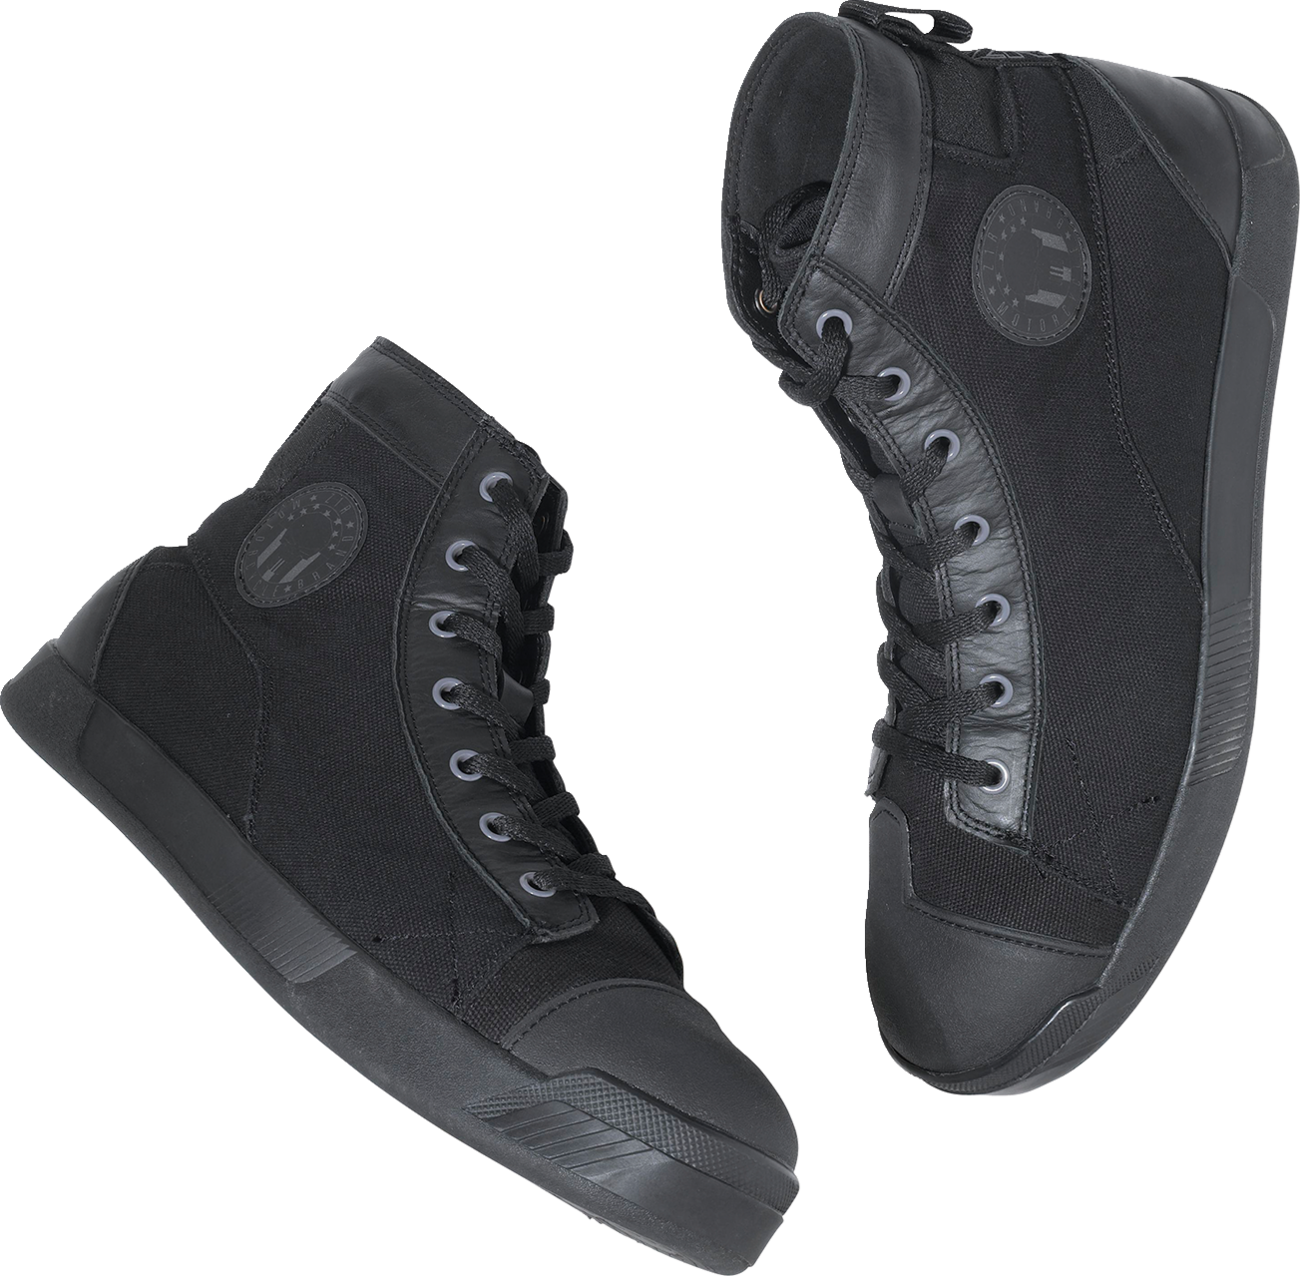 Z1R Haggard Boots - Black - US 11 3401-0959